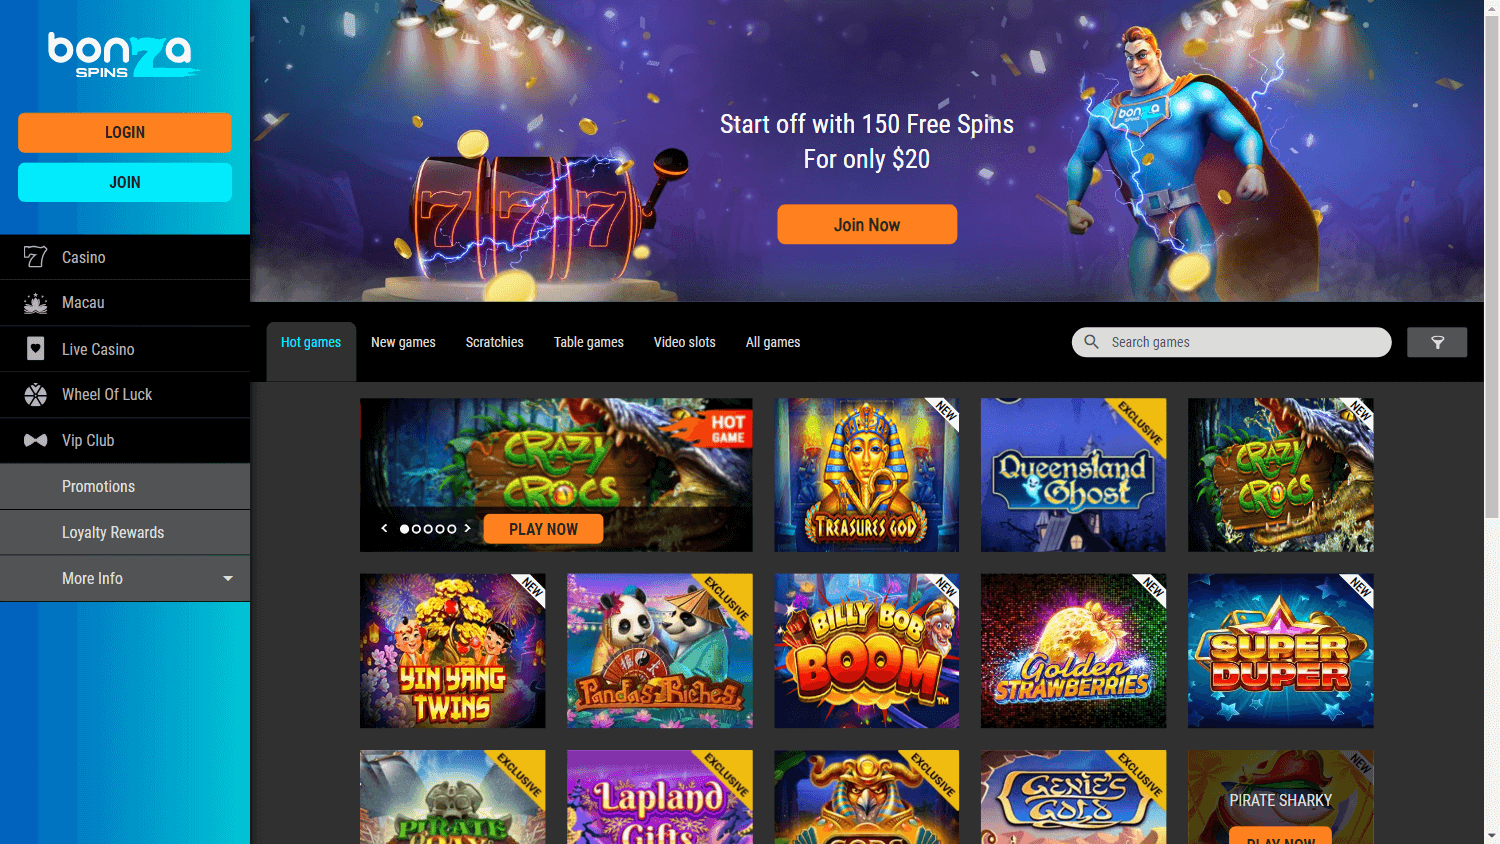 bonza_spins_casino_homepage_desktop